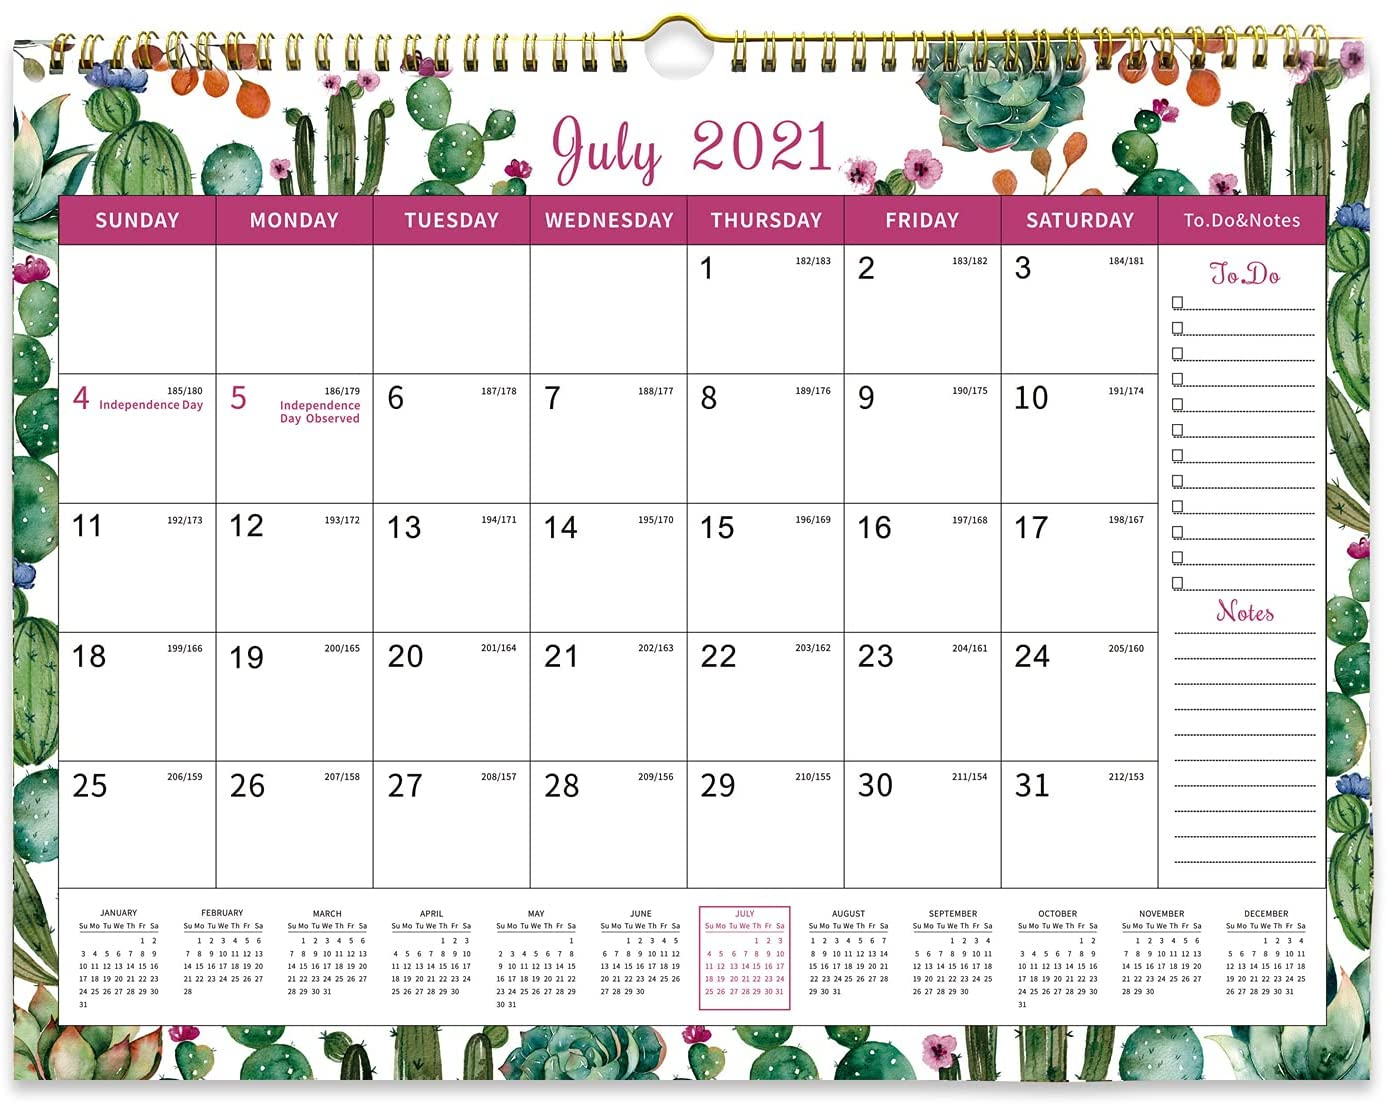 Fall 2022 Psu Calendar - August Calendar 2022